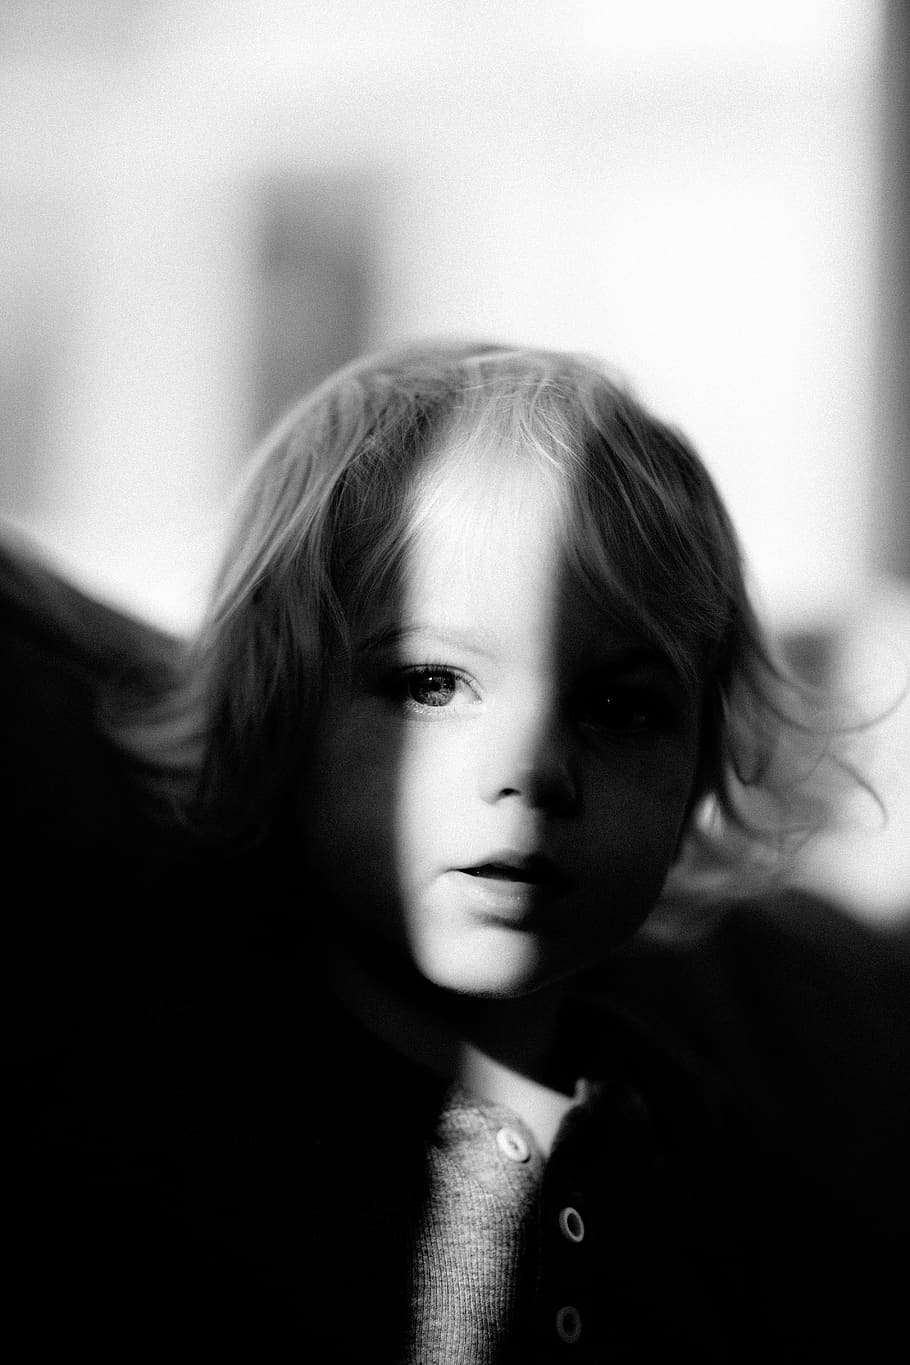 baby, kid, child, blur, black and white, portrait, childhood, headshot, one person, indoors